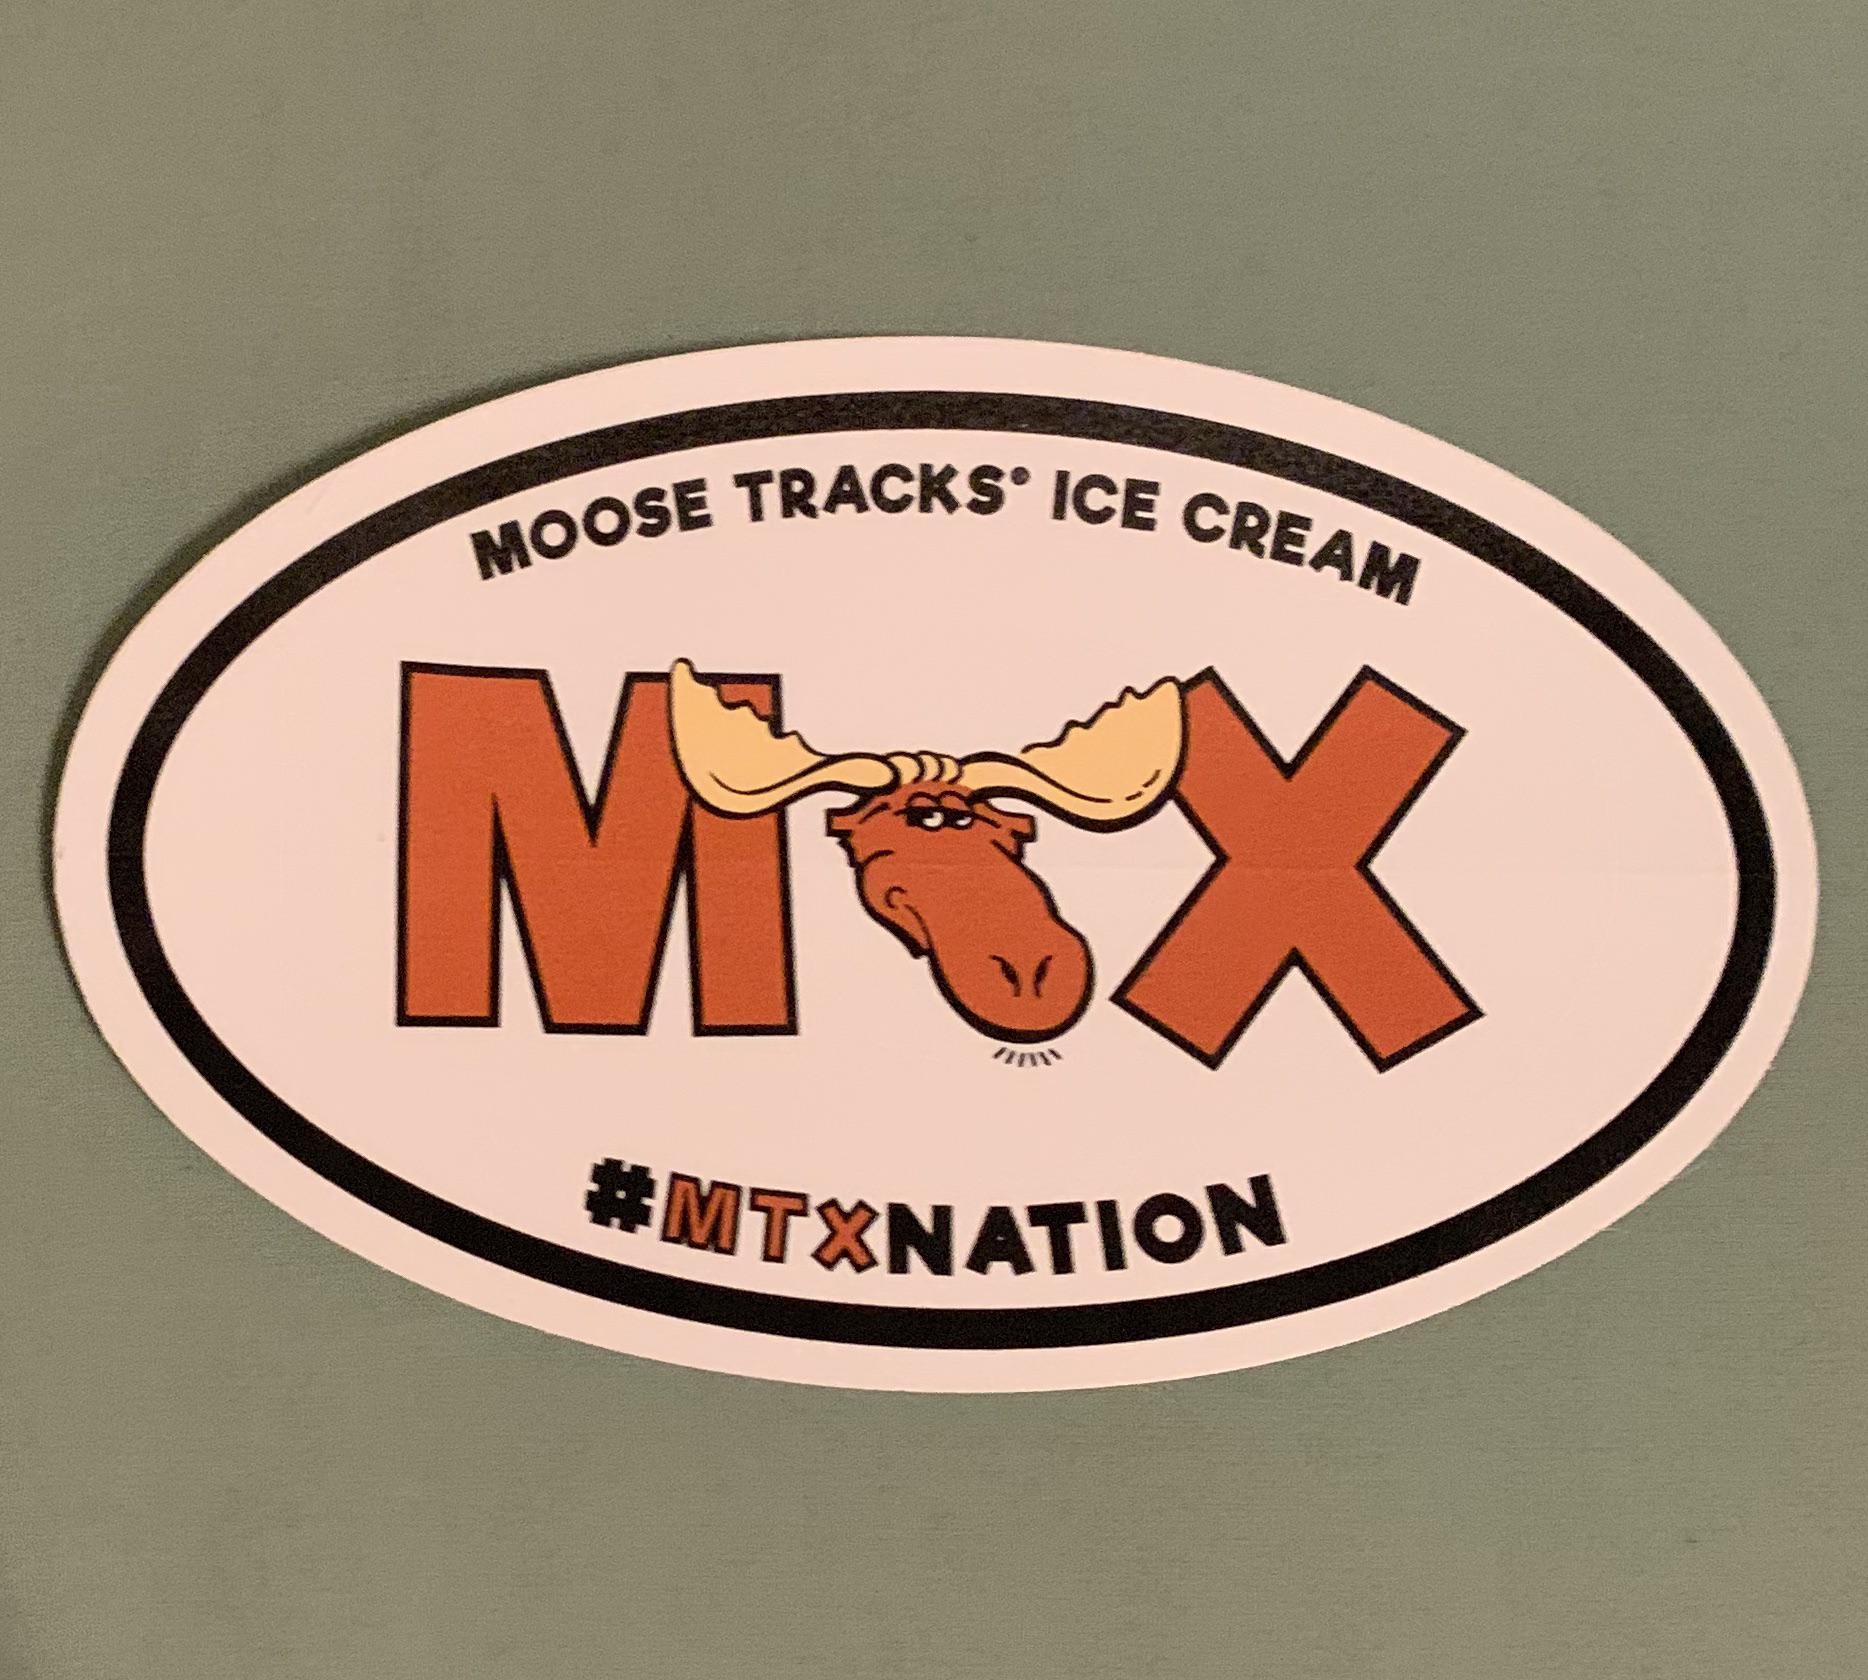 Moose tracks ice cream sticker